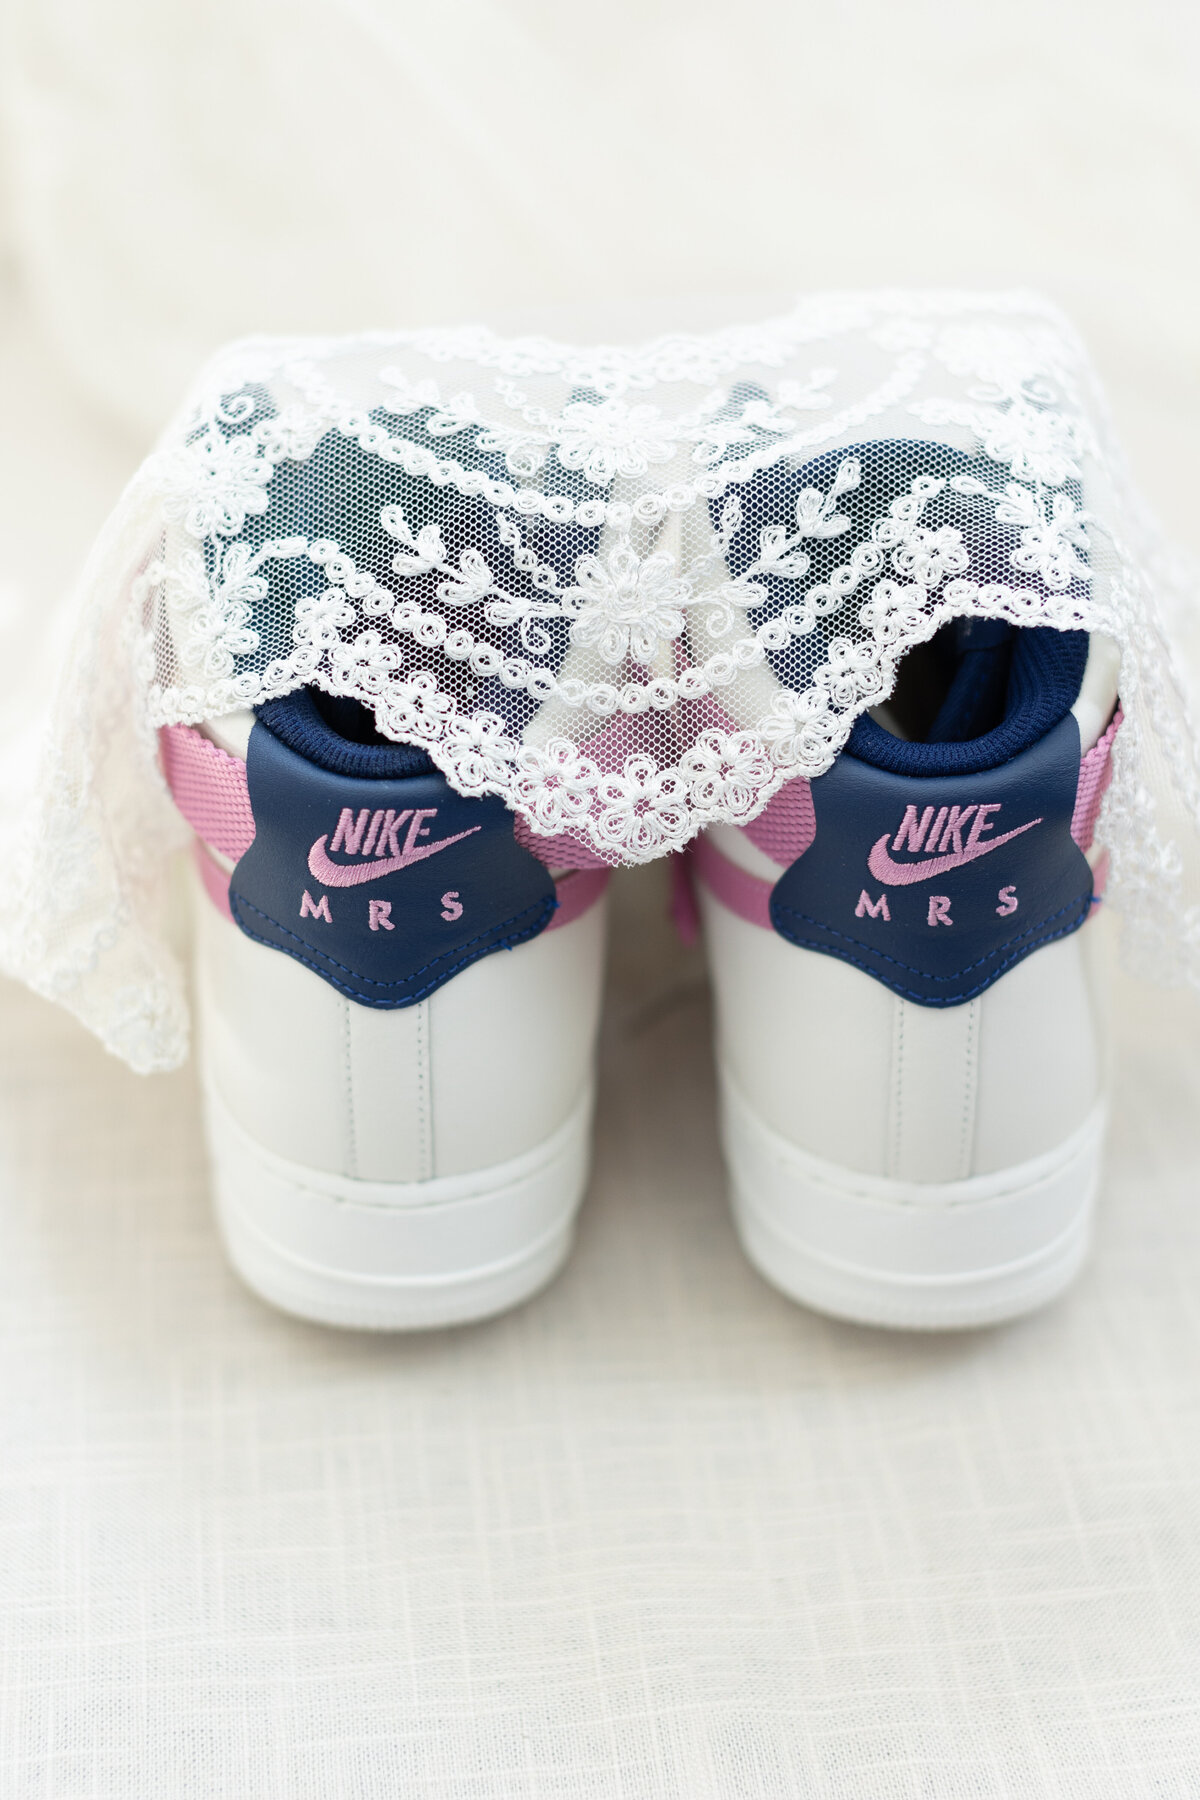 Custom wedding shoes